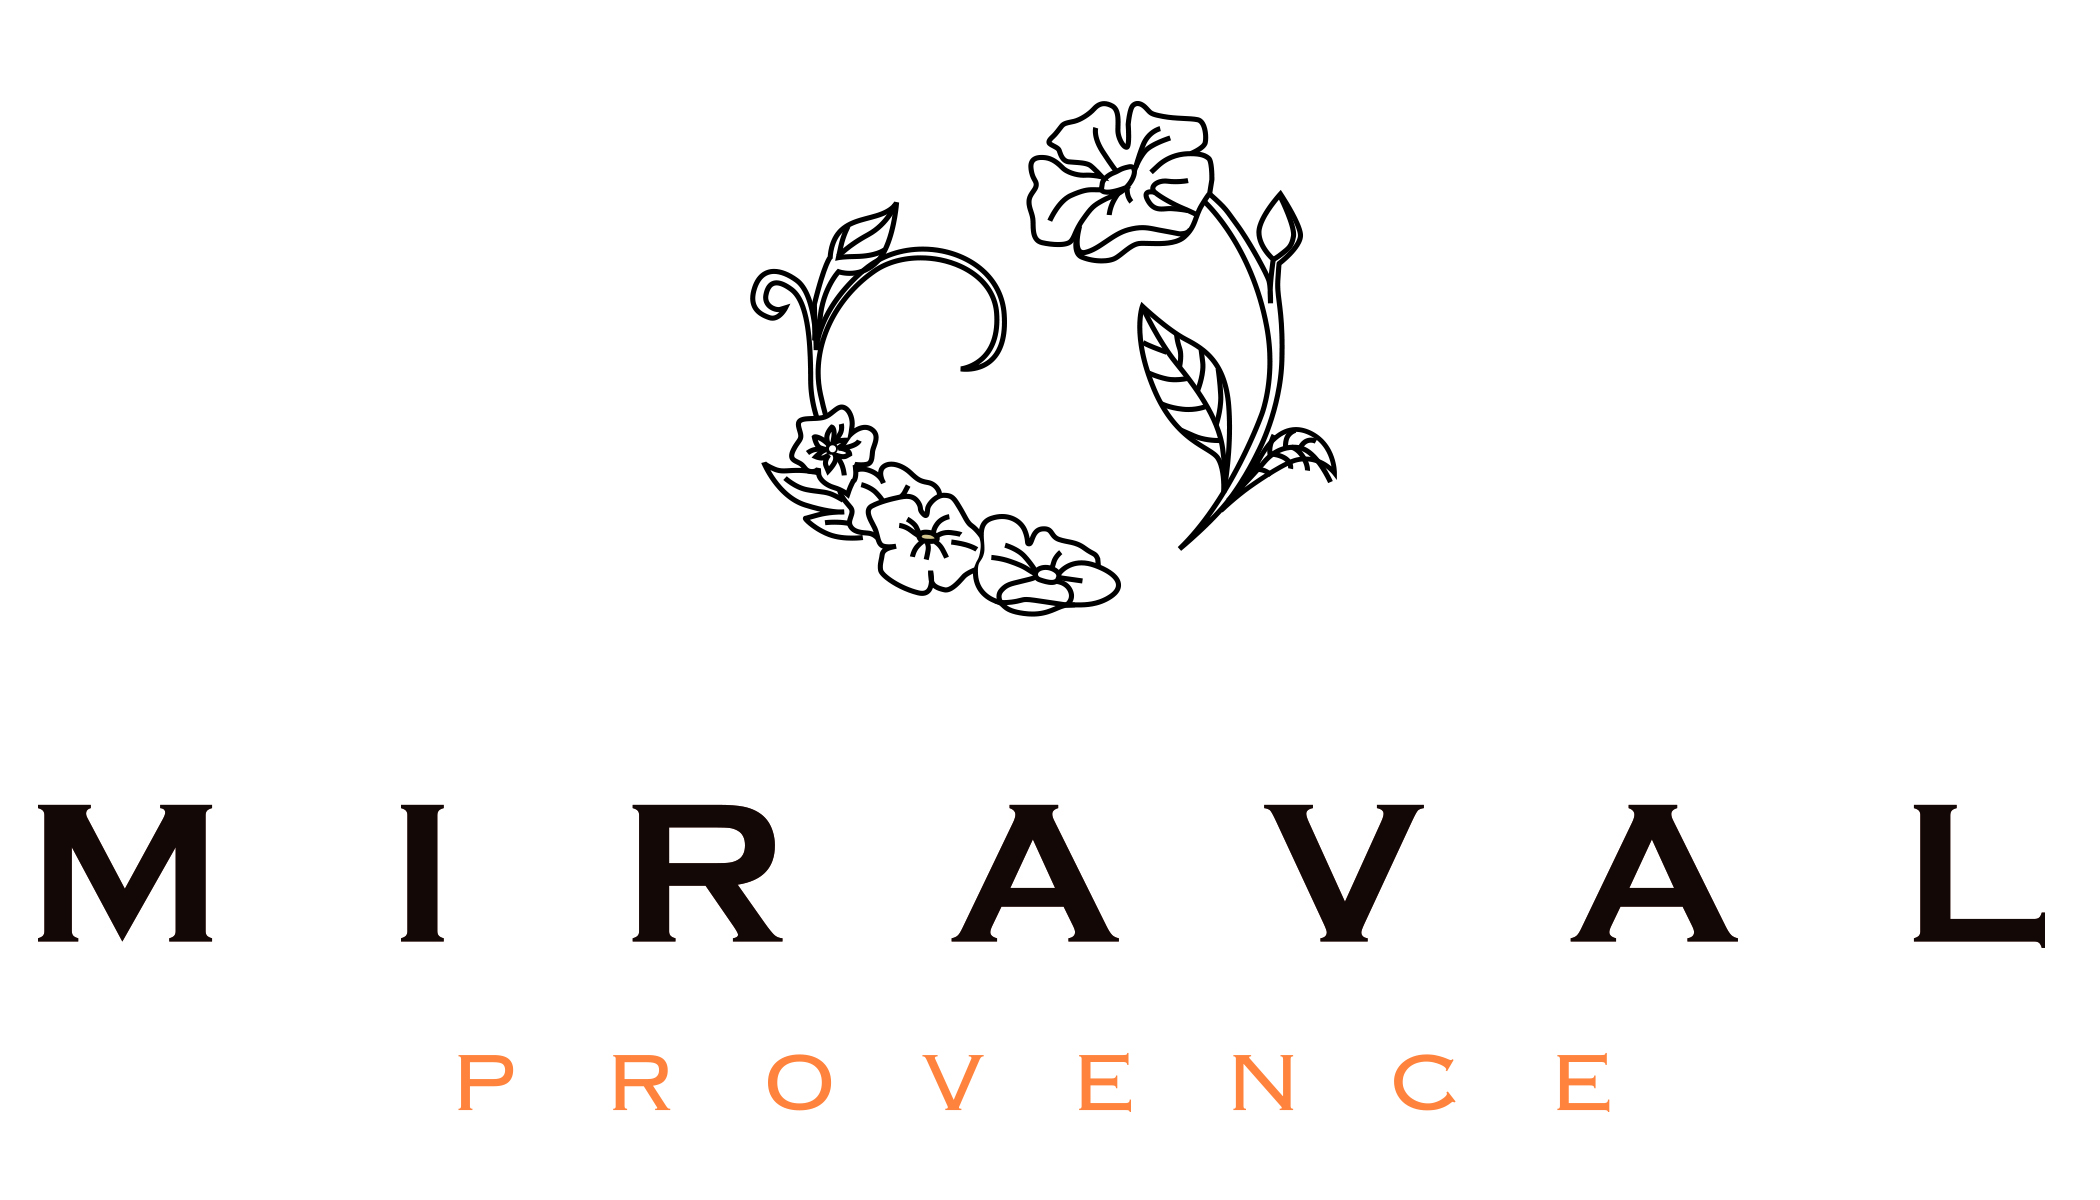 Miraval Wine Bottle Logos